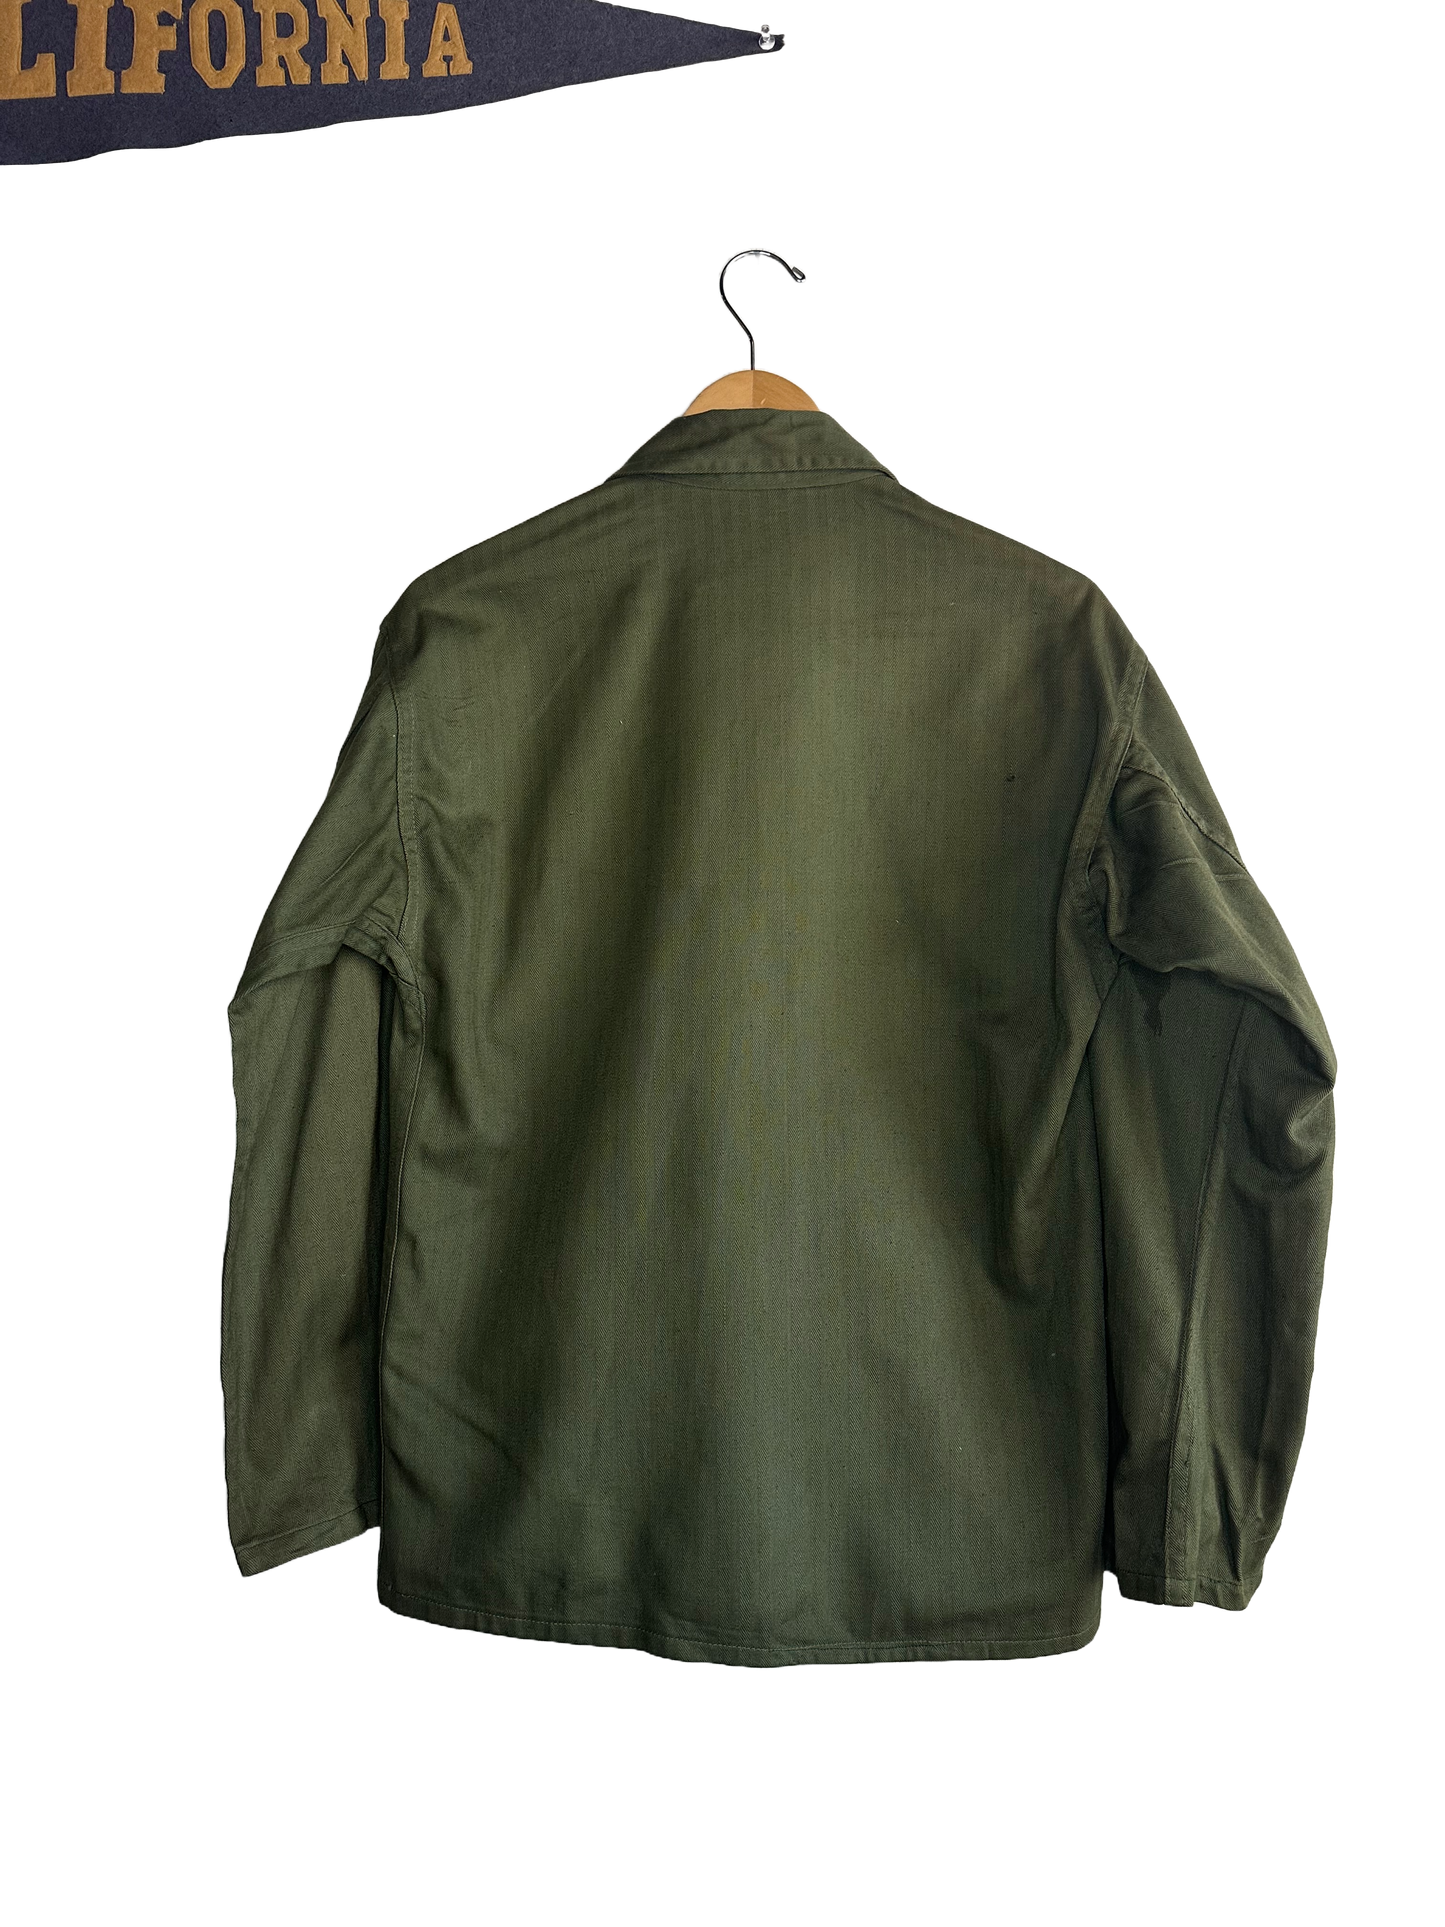 back view of jacket , plain 